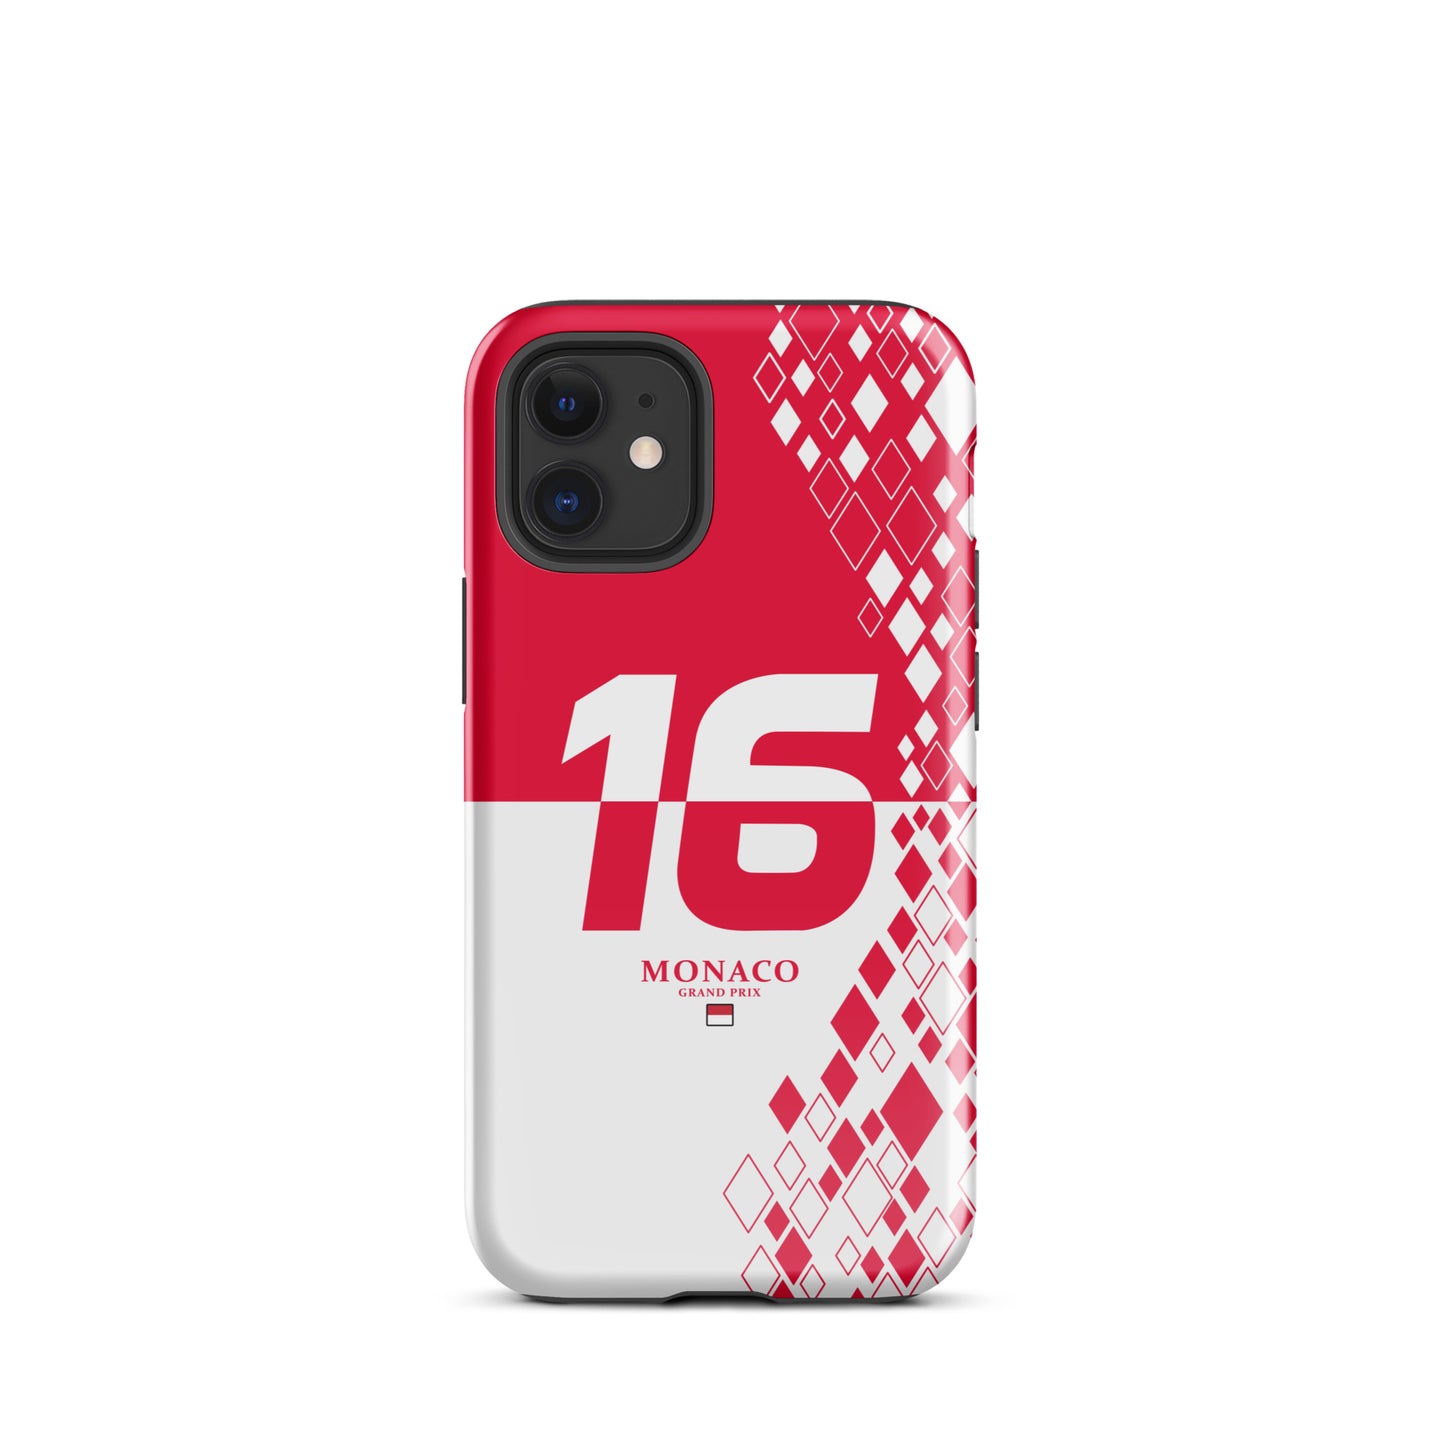 Charles Leclerc 16 Monaco iPhone 12 mini glossy case